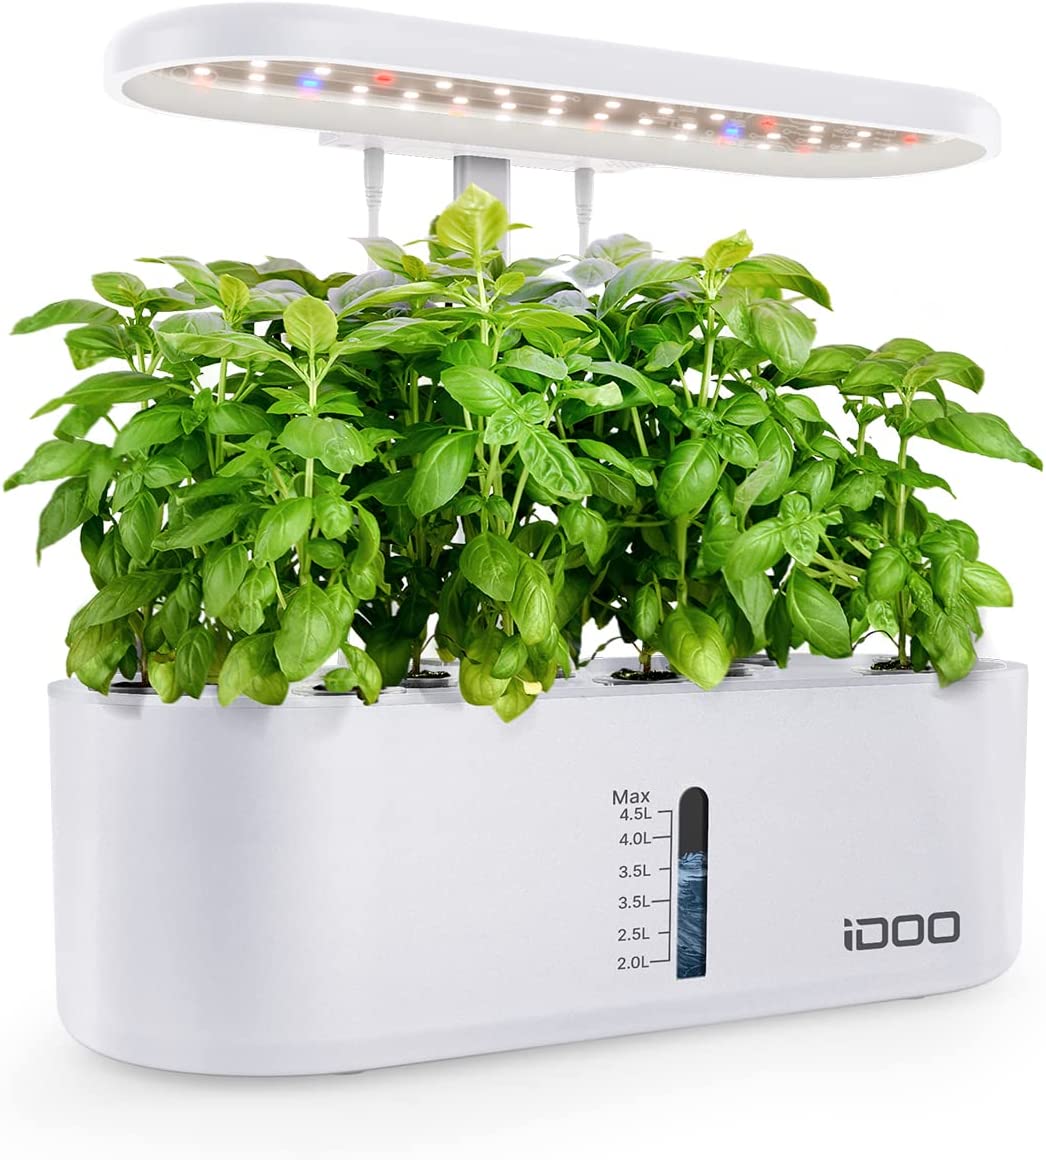 iDOO Hydroponics Growing System, 10 pods Smart Garden with Auto Timer, LED Grow Light, Indoor Herb Garden, Height Adjustable